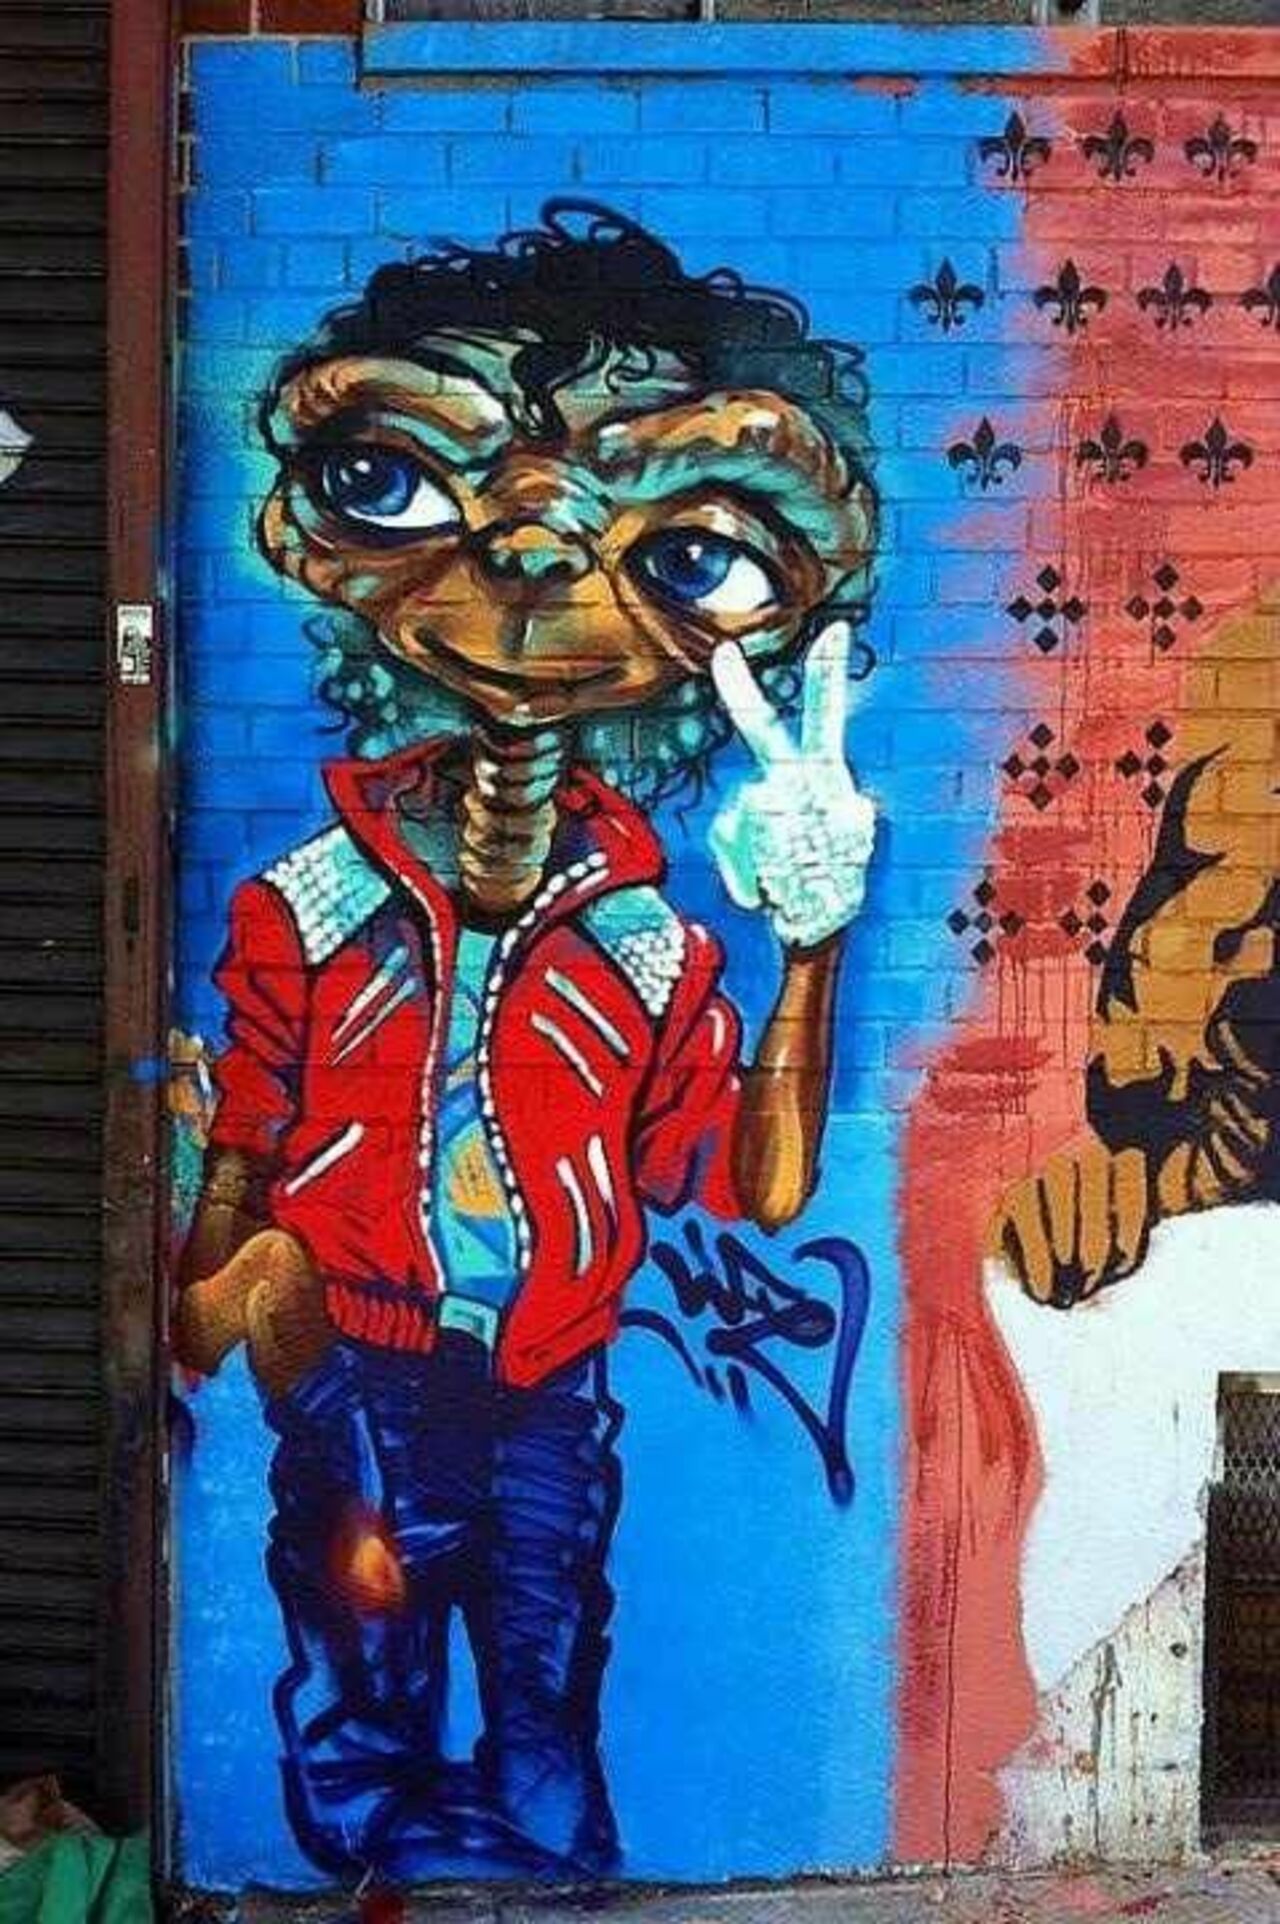 ET Michael Jackson mural. IDK the artist#streetart #mural #graffiti #art https://t.co/ofuFDnbOlQ